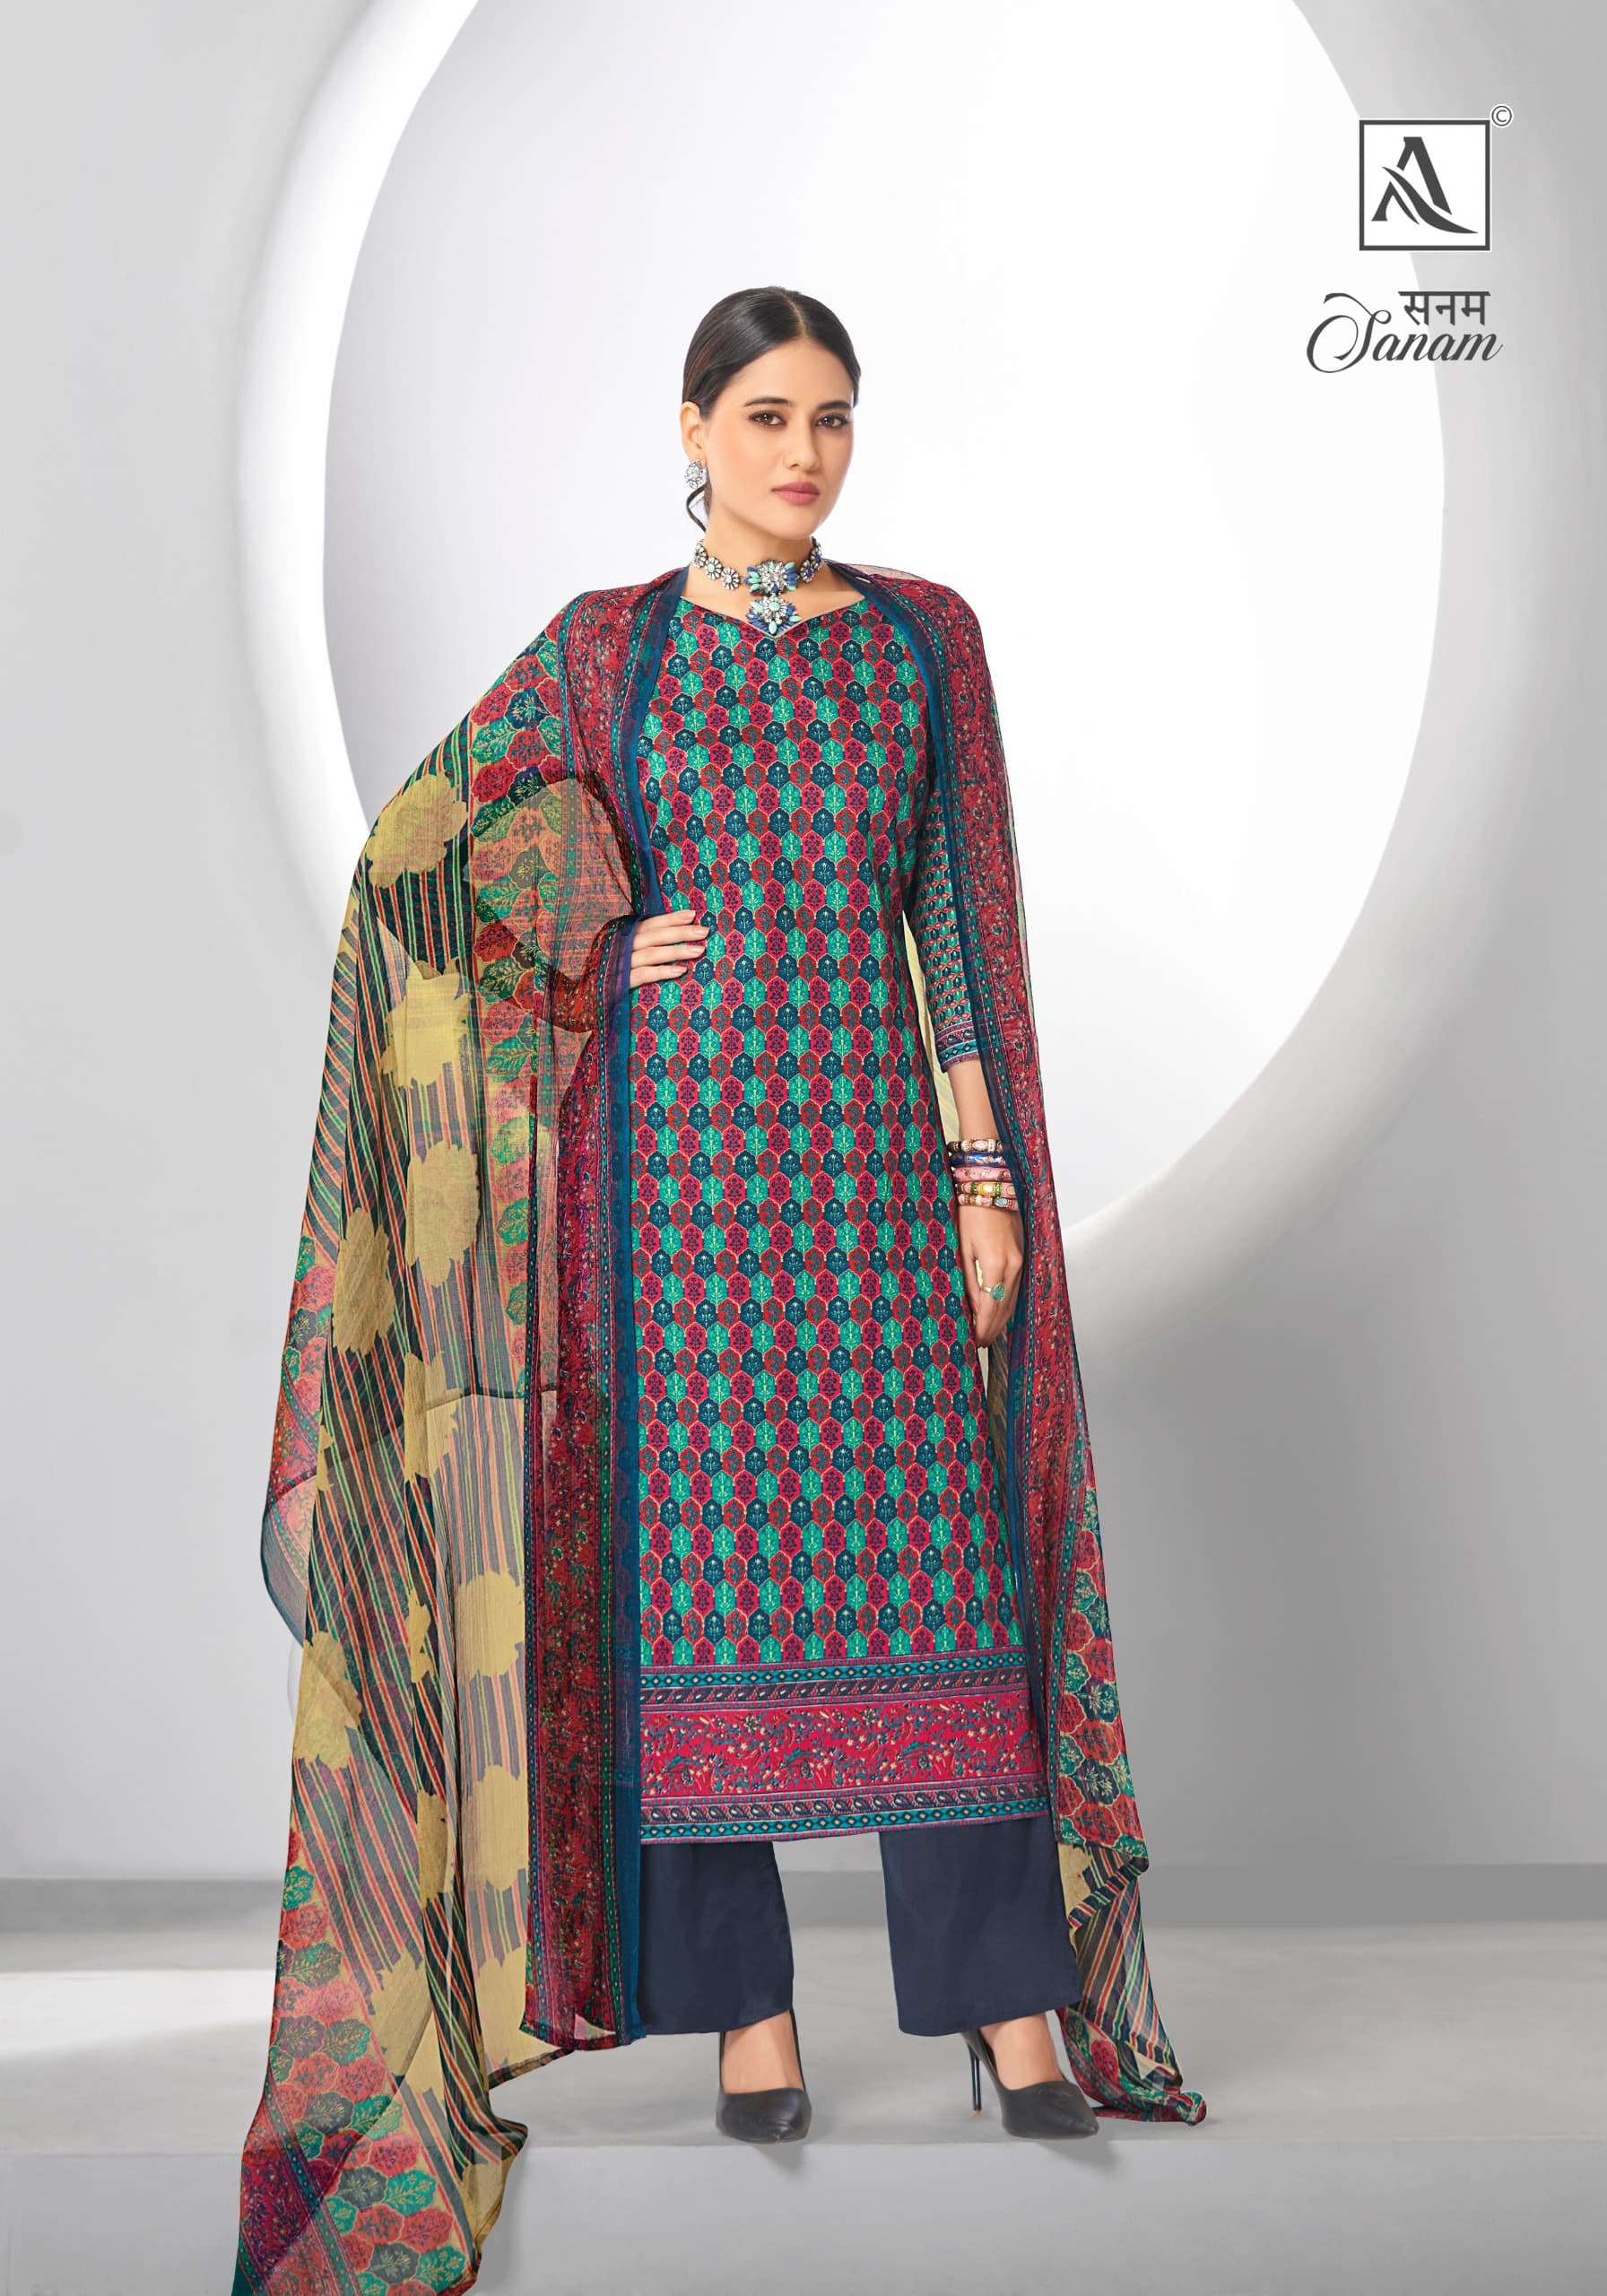 alok suit sanam printed designer zam cotton designer salwar suits wholesale price surat gujarat 